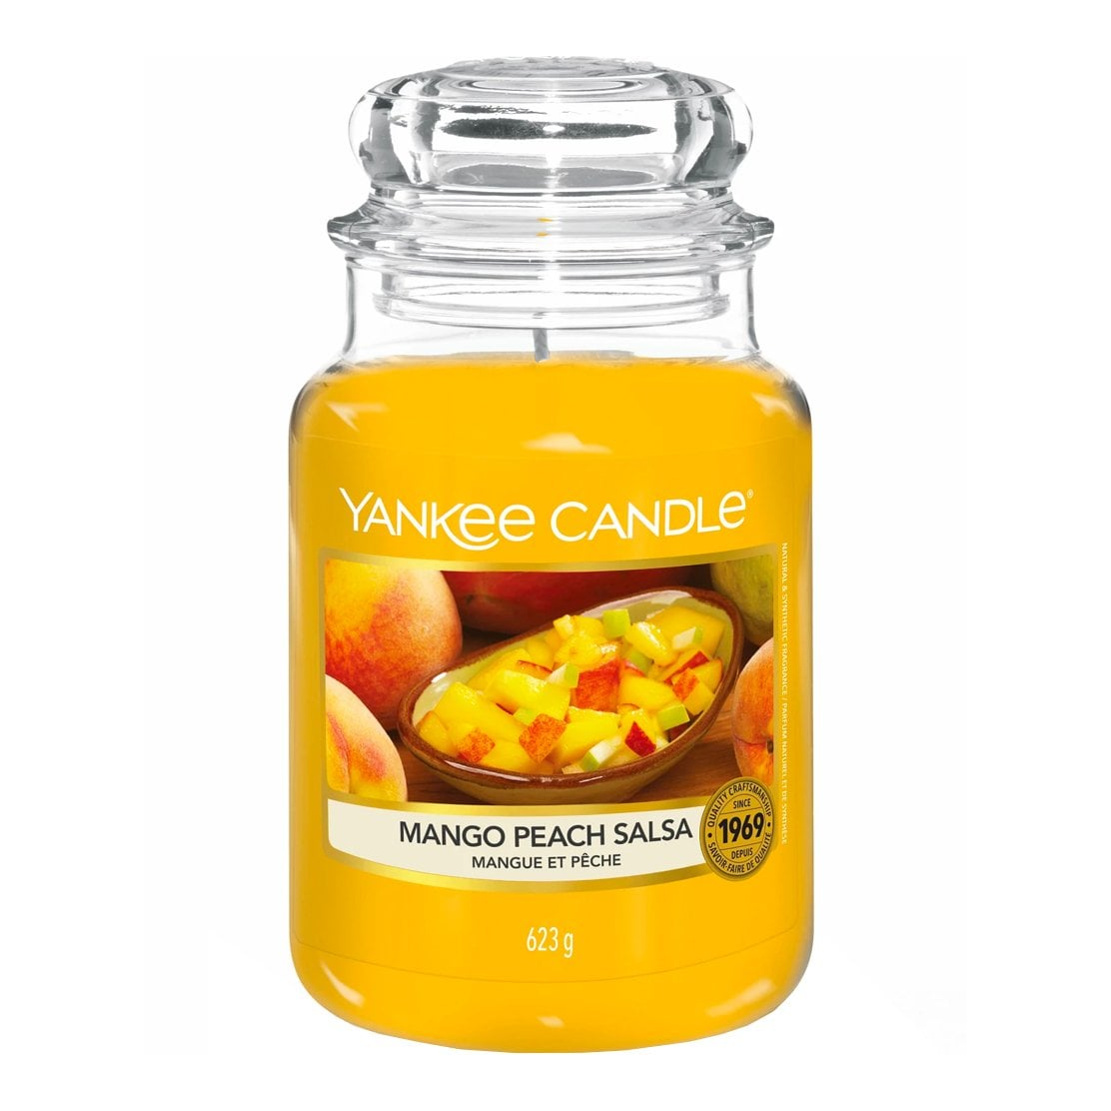 Yankee Candle Mango Peach Salsa Large Jar